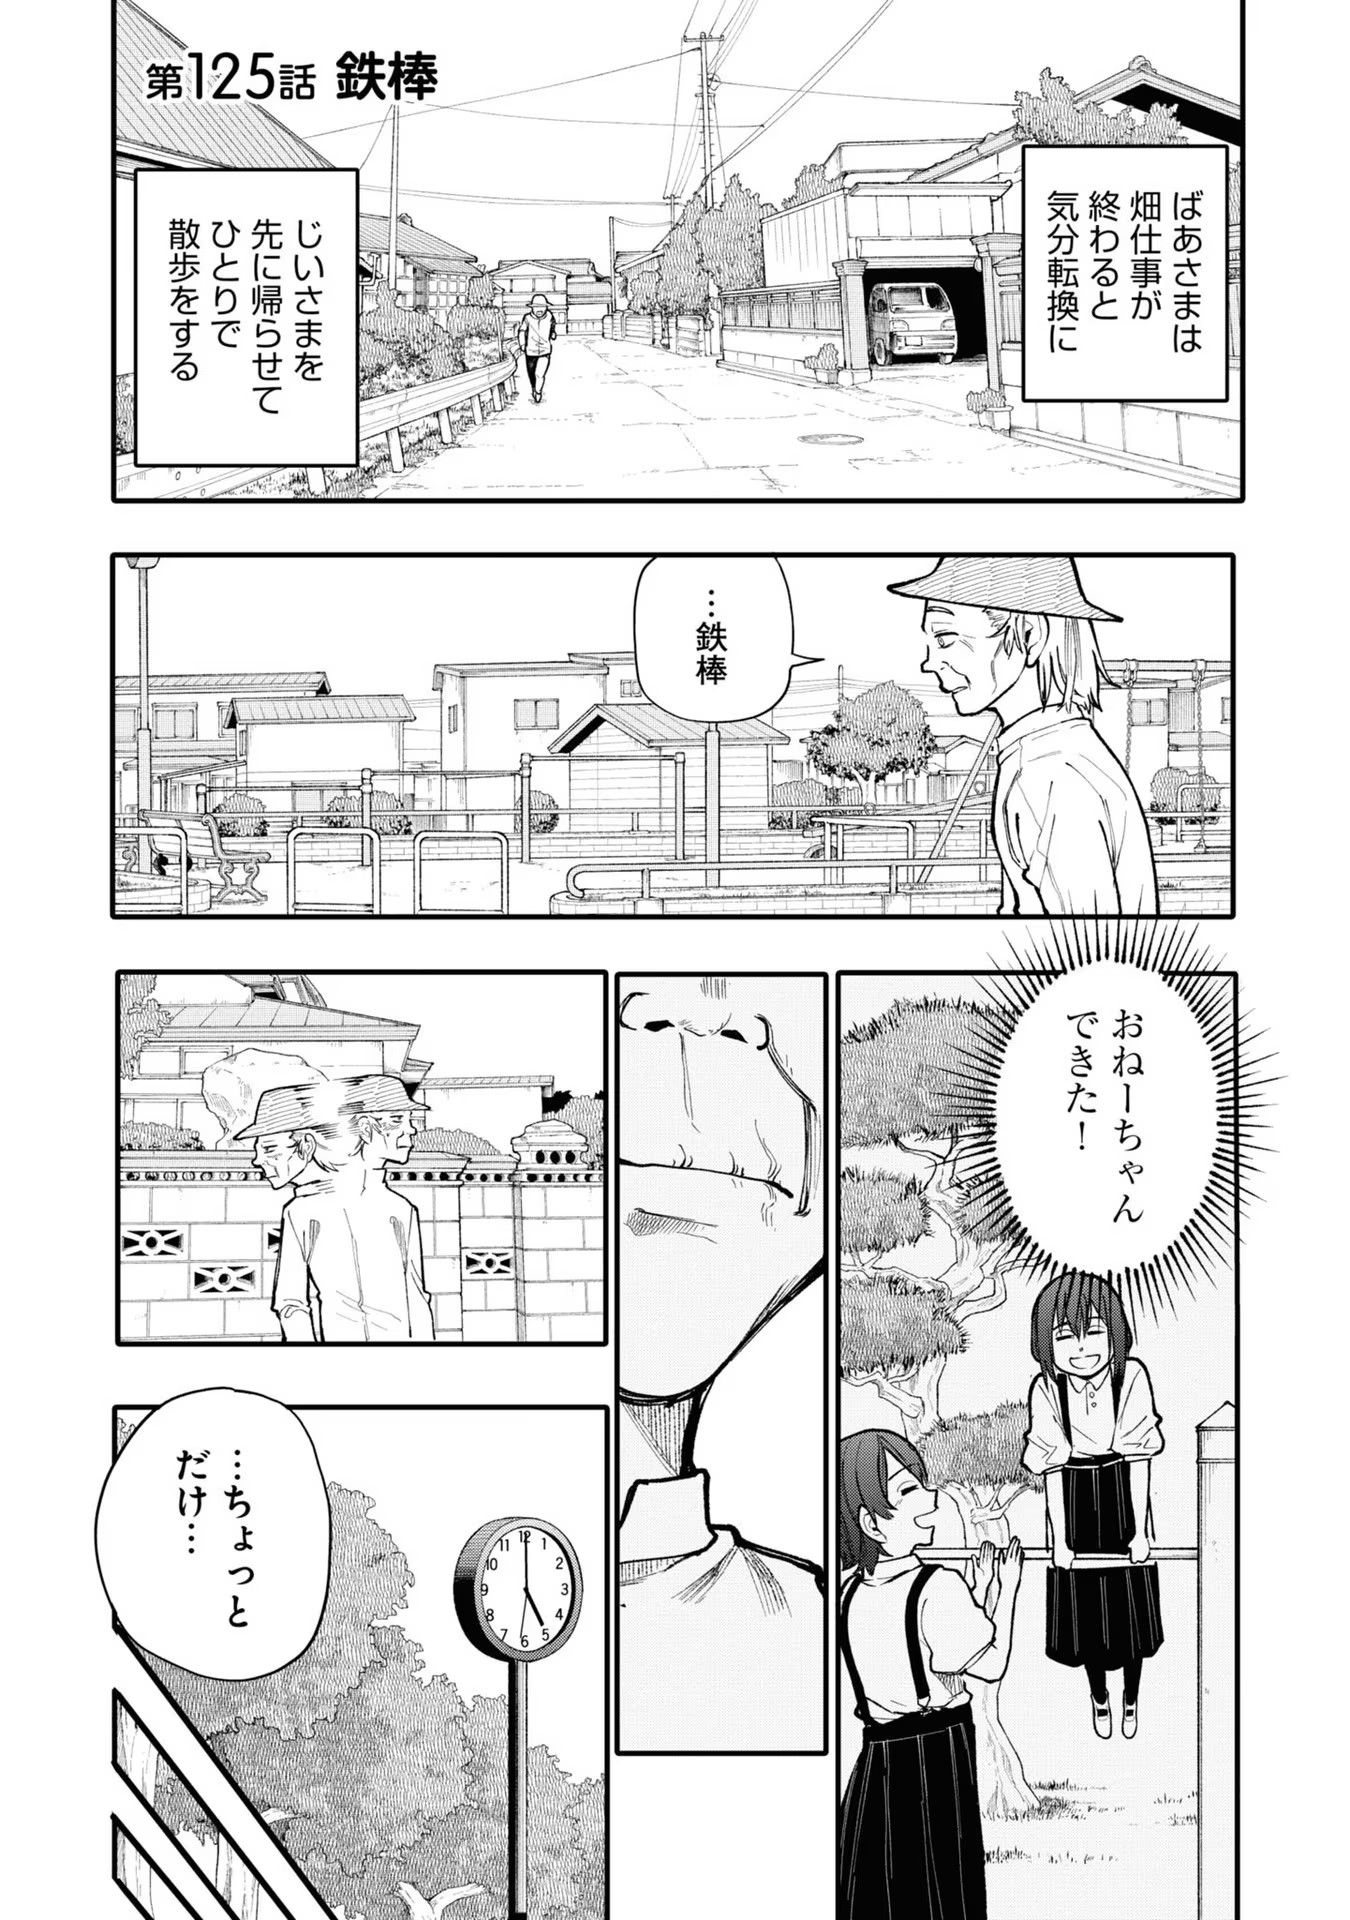 Ojii-san to Obaa-san ga Wakigaetta Hanashi - Chapter 125 - Page 1